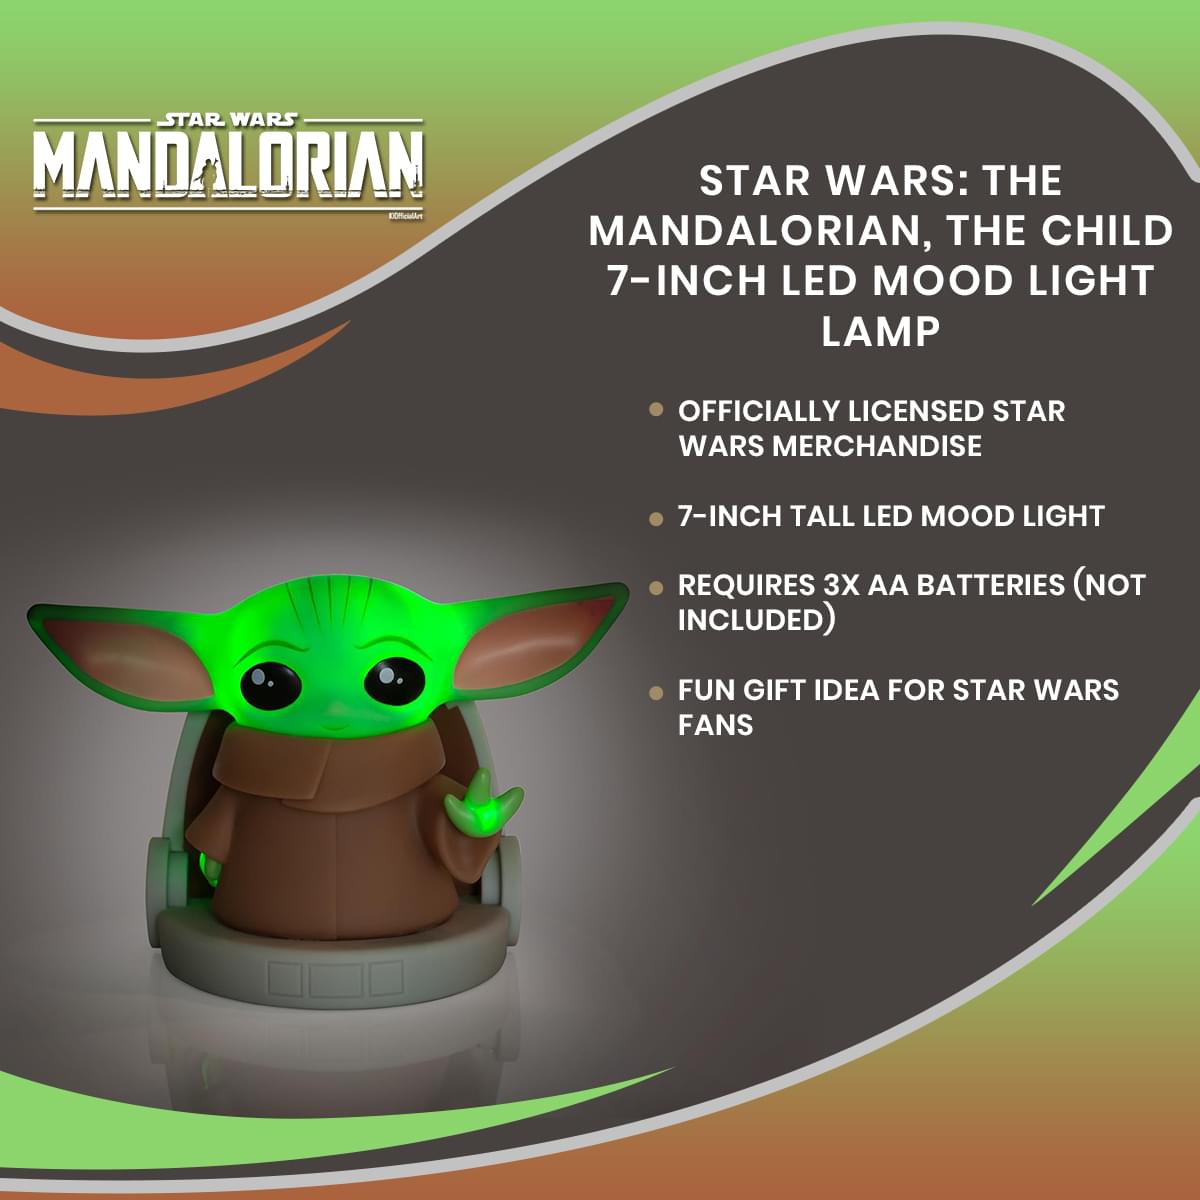 Star Wars: The Mandalorian, The Child 7-Inch LED Mood Light Lamp